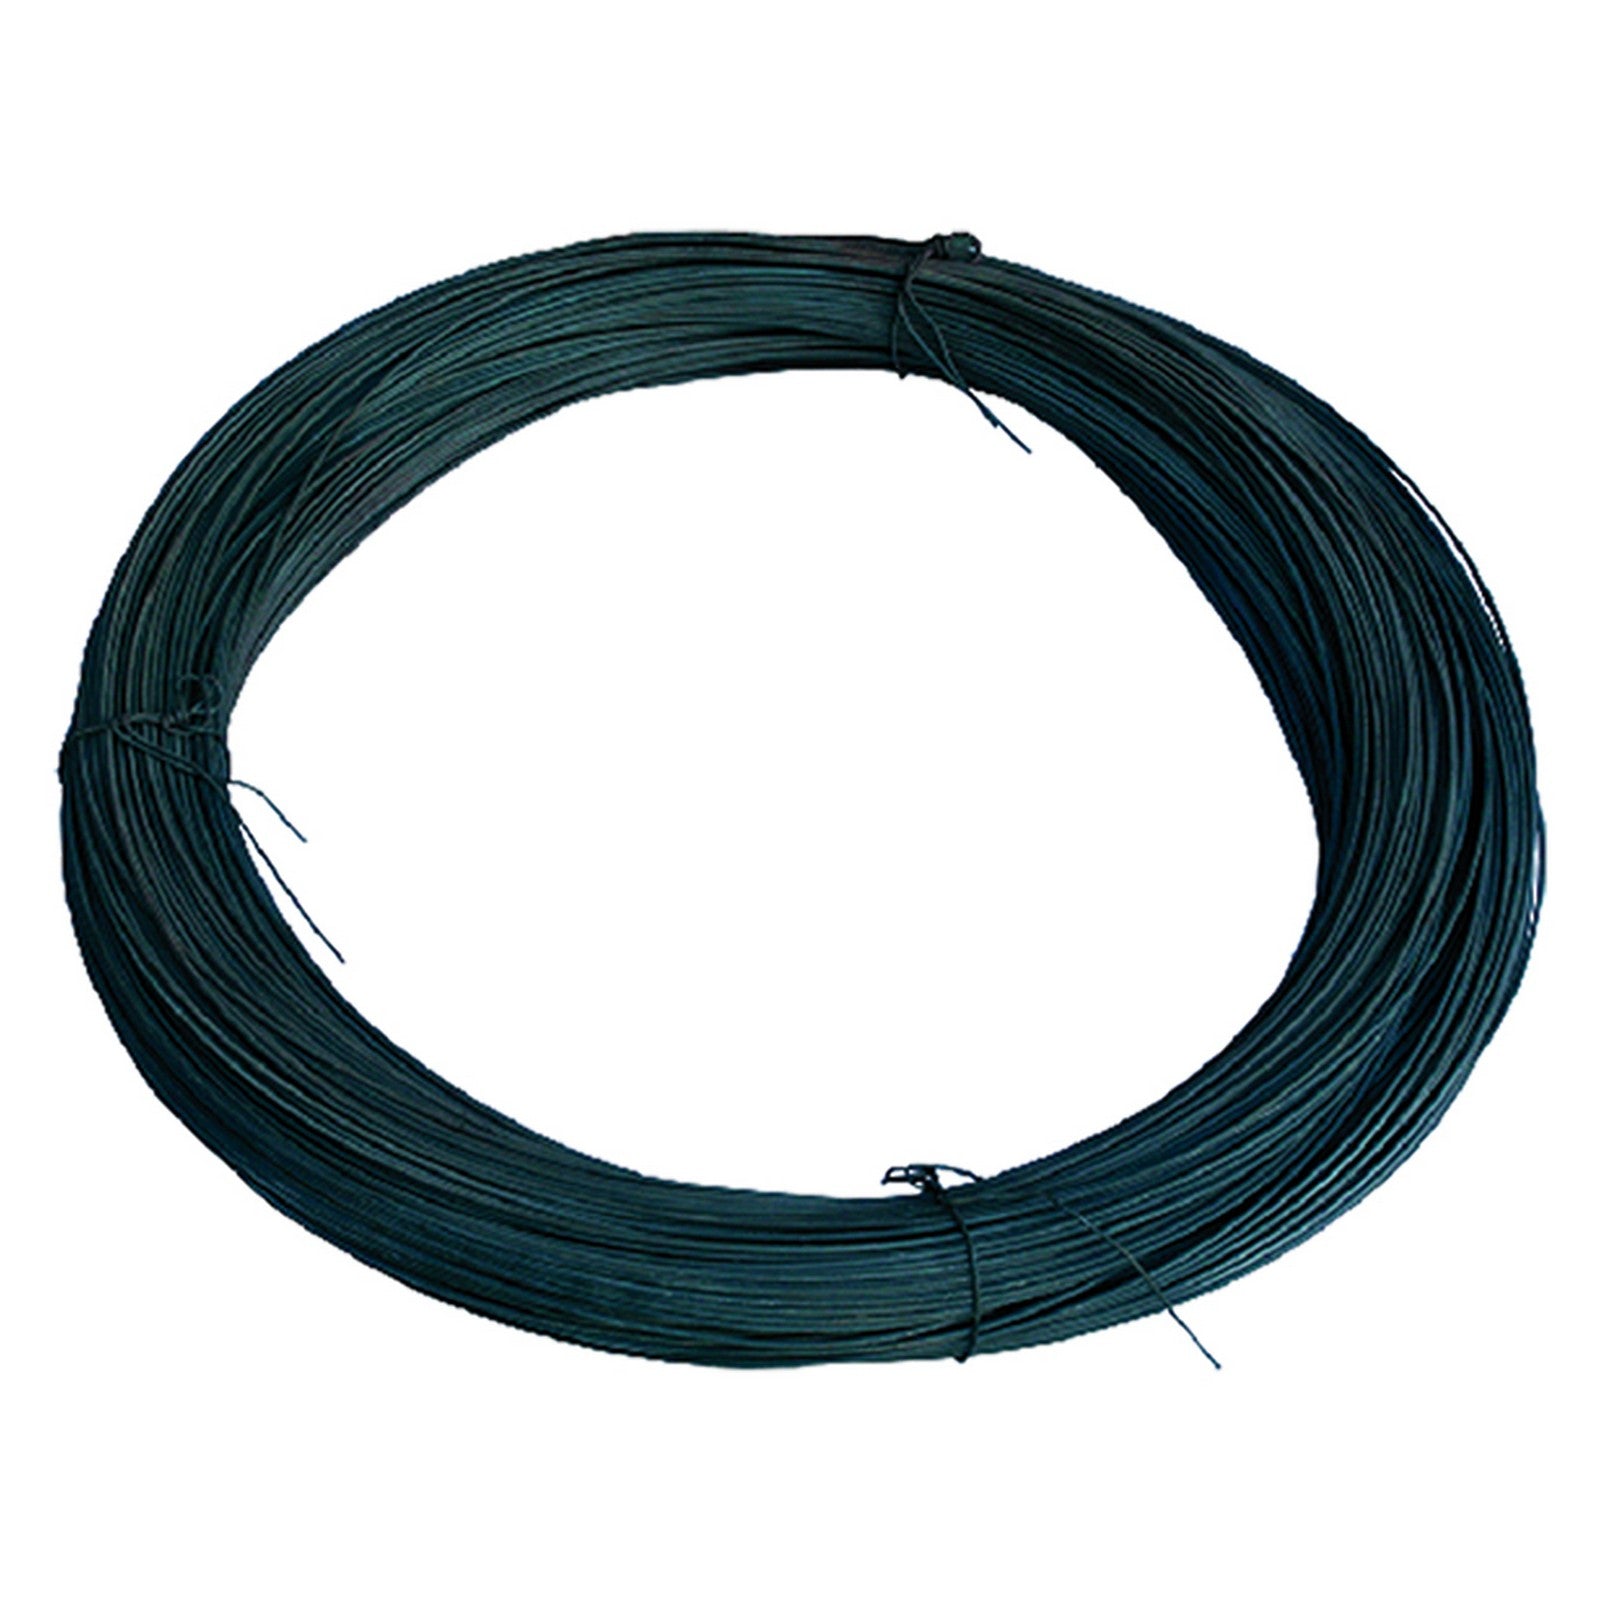 25kg filo ferro nero n. 18 mm 3,5 cod:ferx.107455nlm